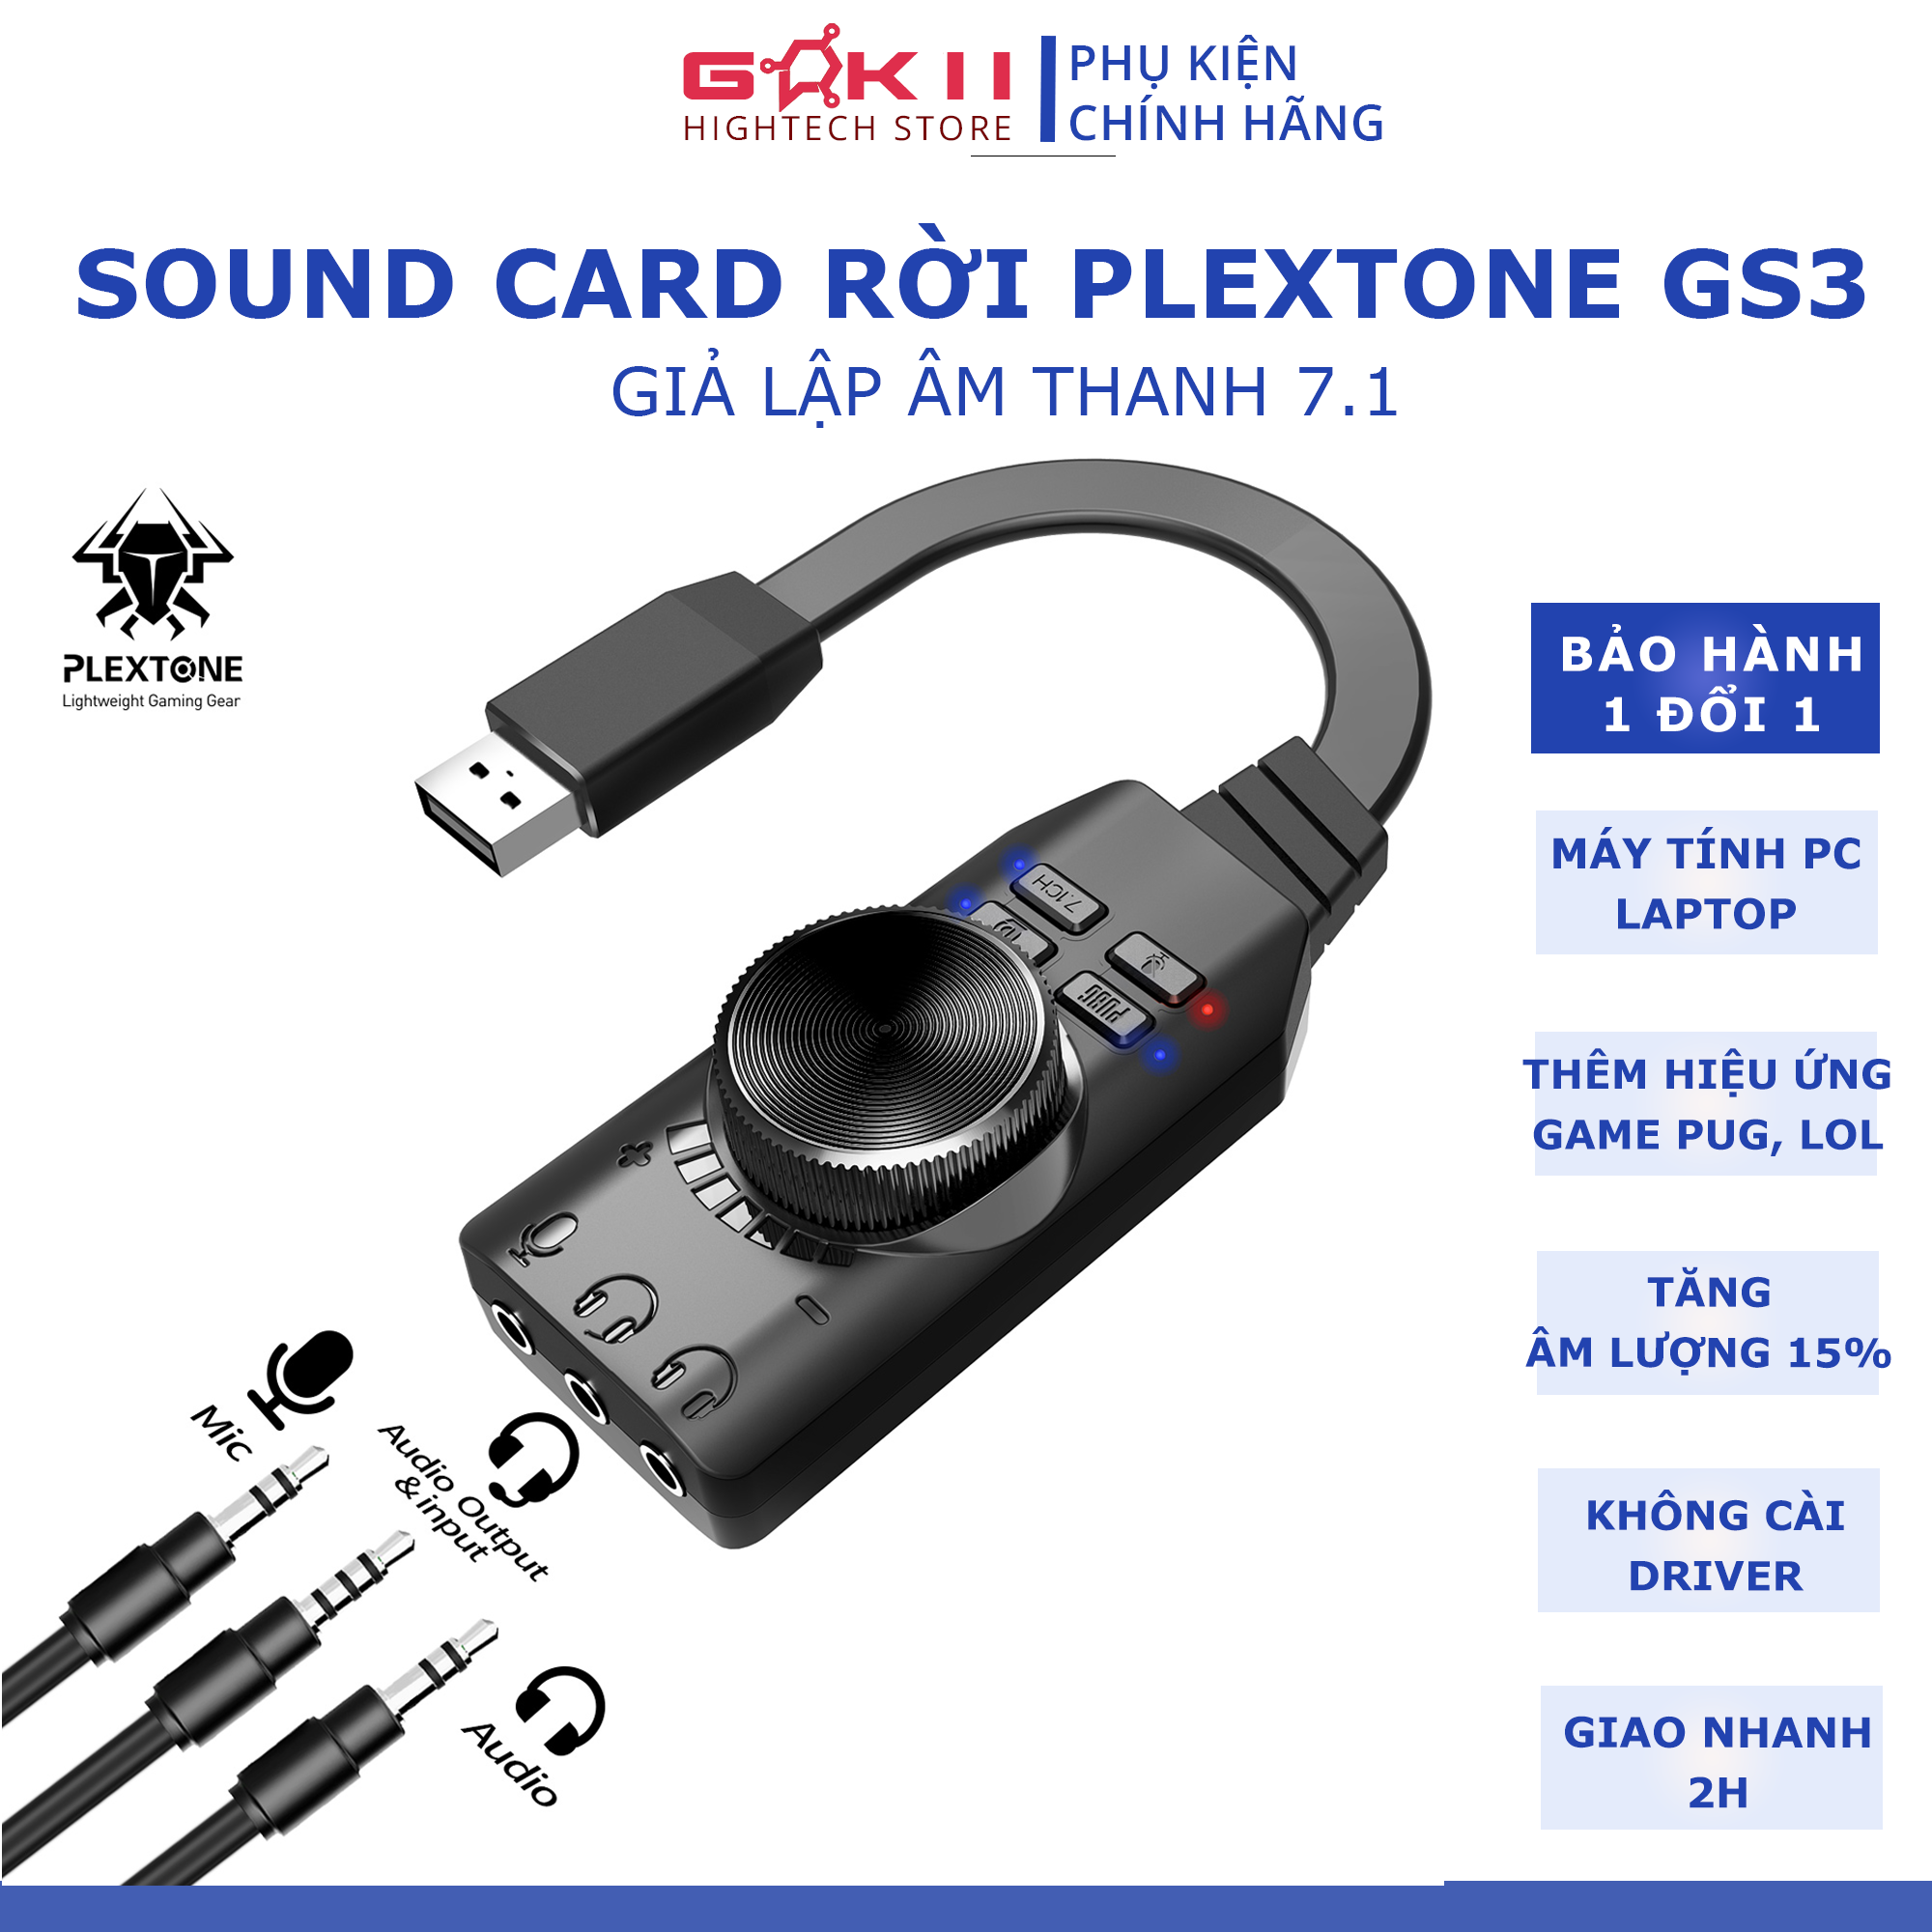 Sound card âm thanh 7.1 Plextone Gs3 cho máy tính PC